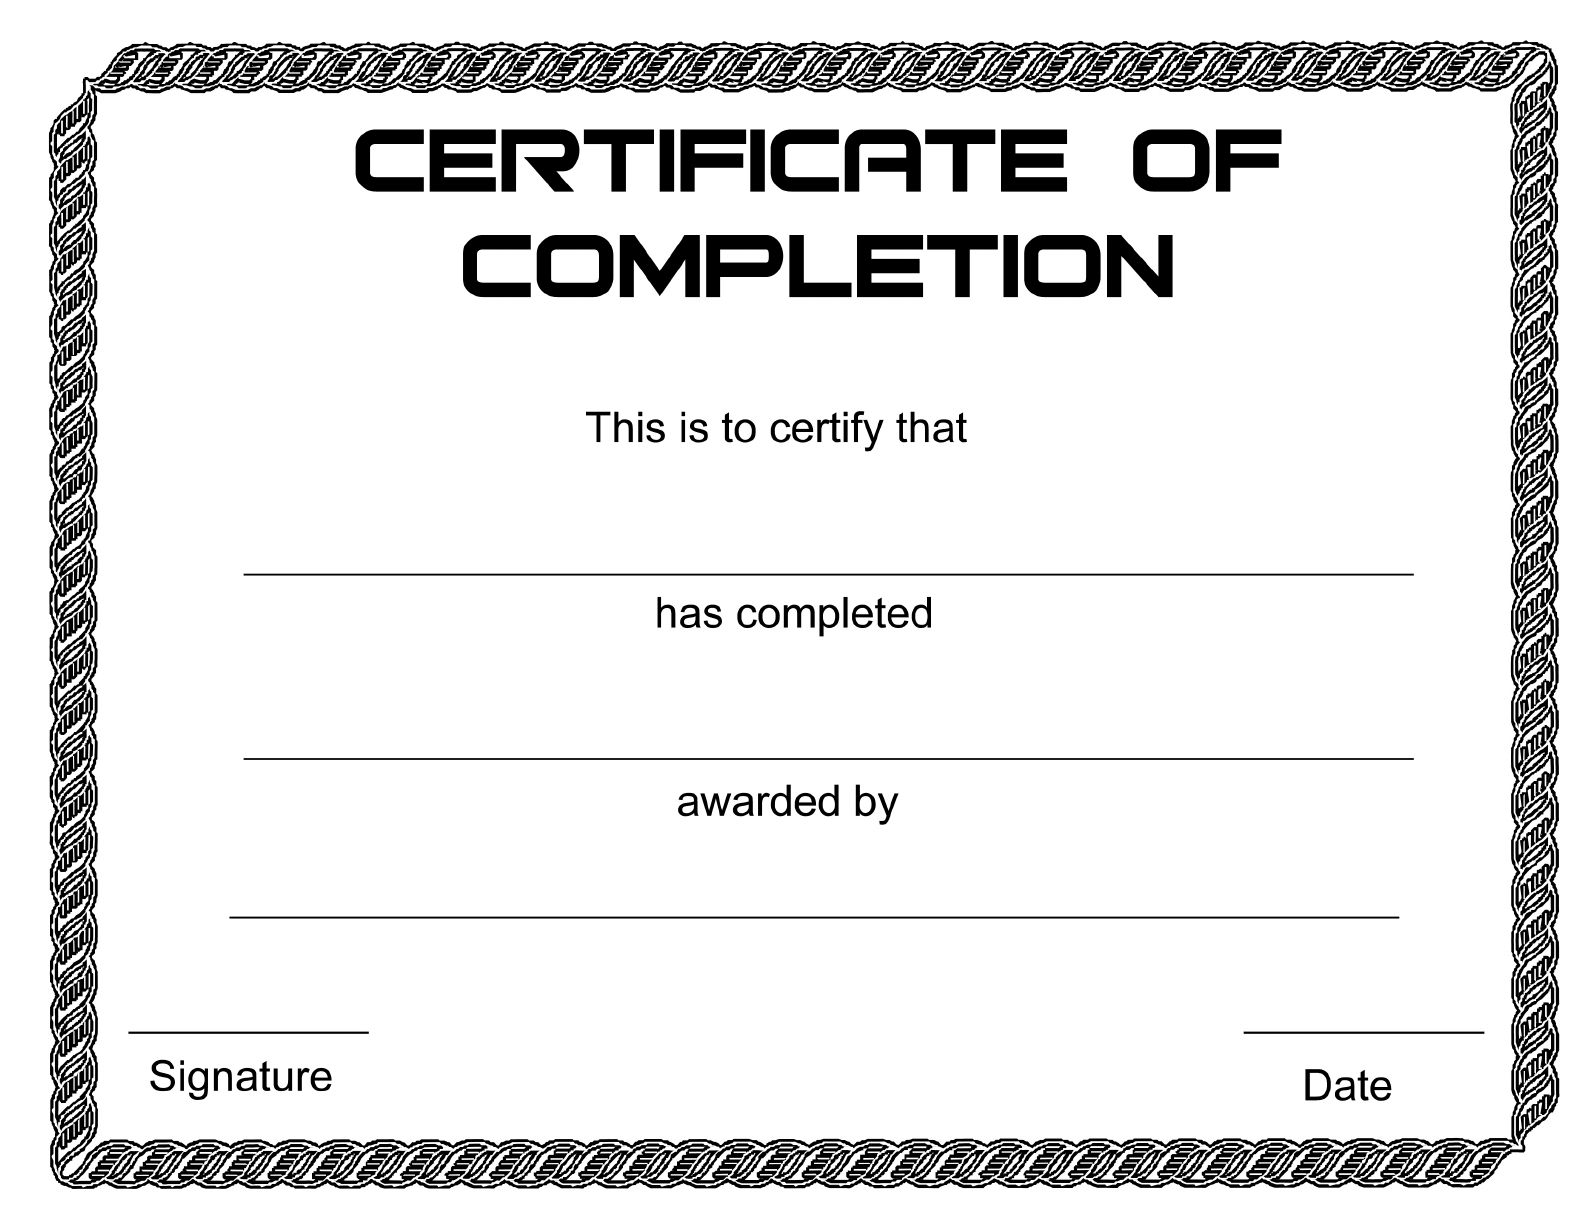 print-certificate-of-completion-form-edit-fill-sign-online-handypdf